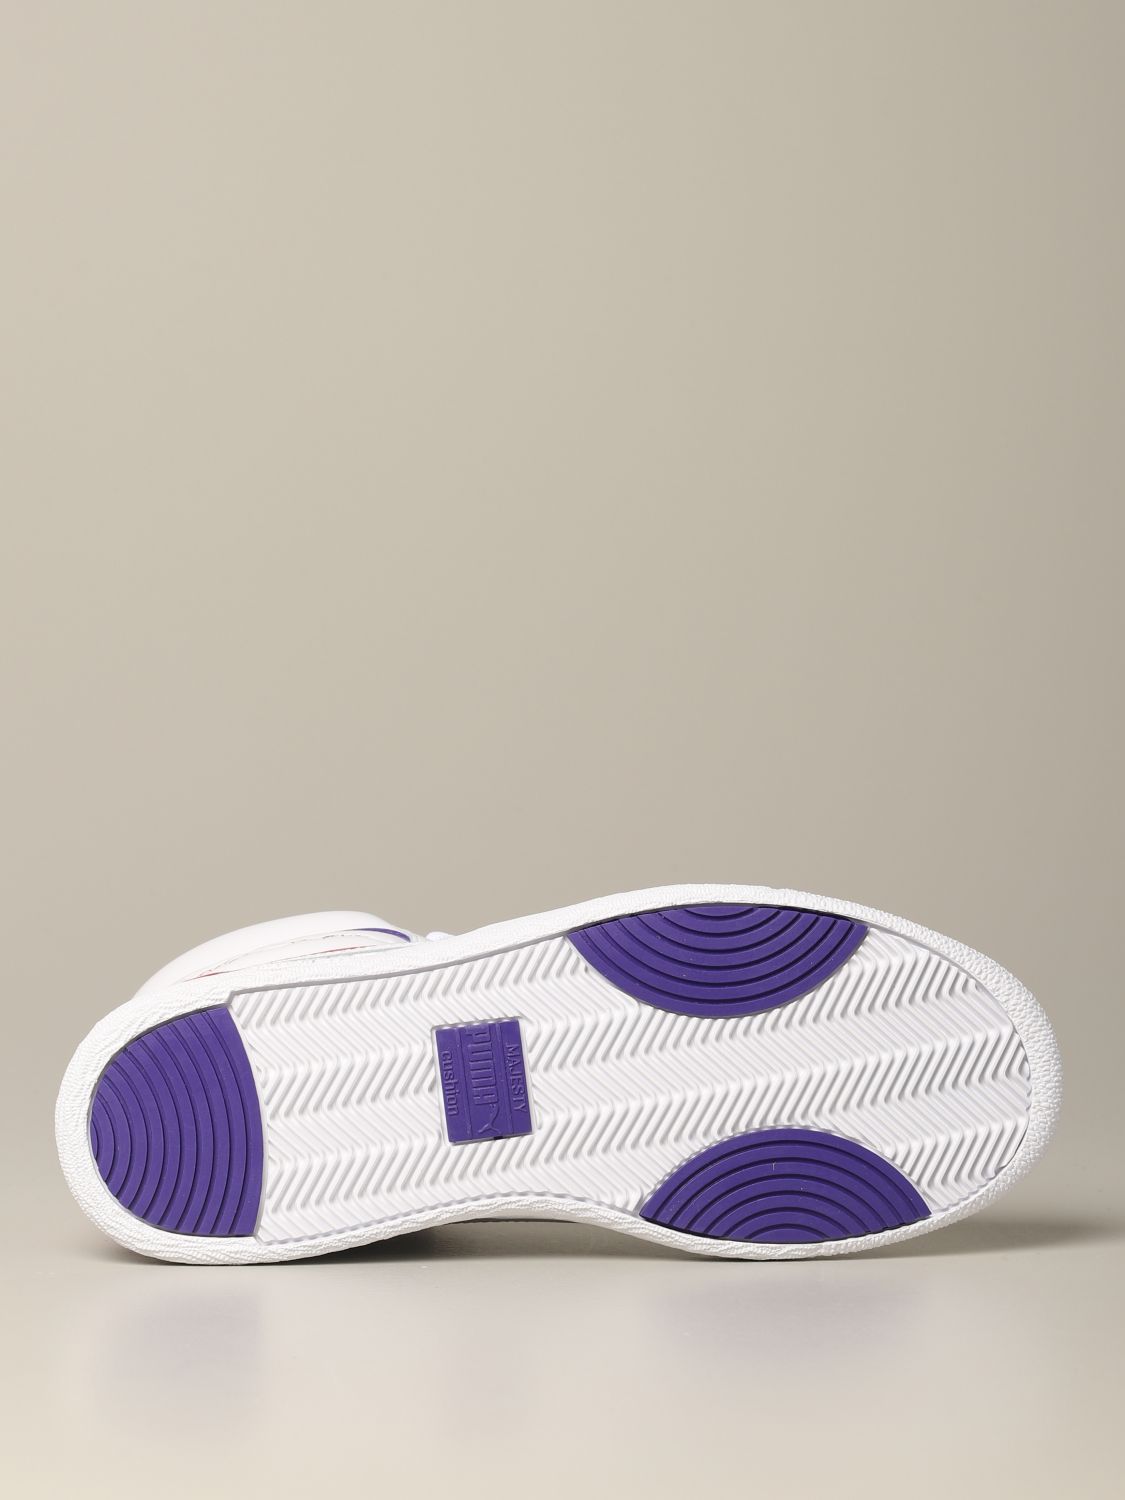 purple puma shoes mens